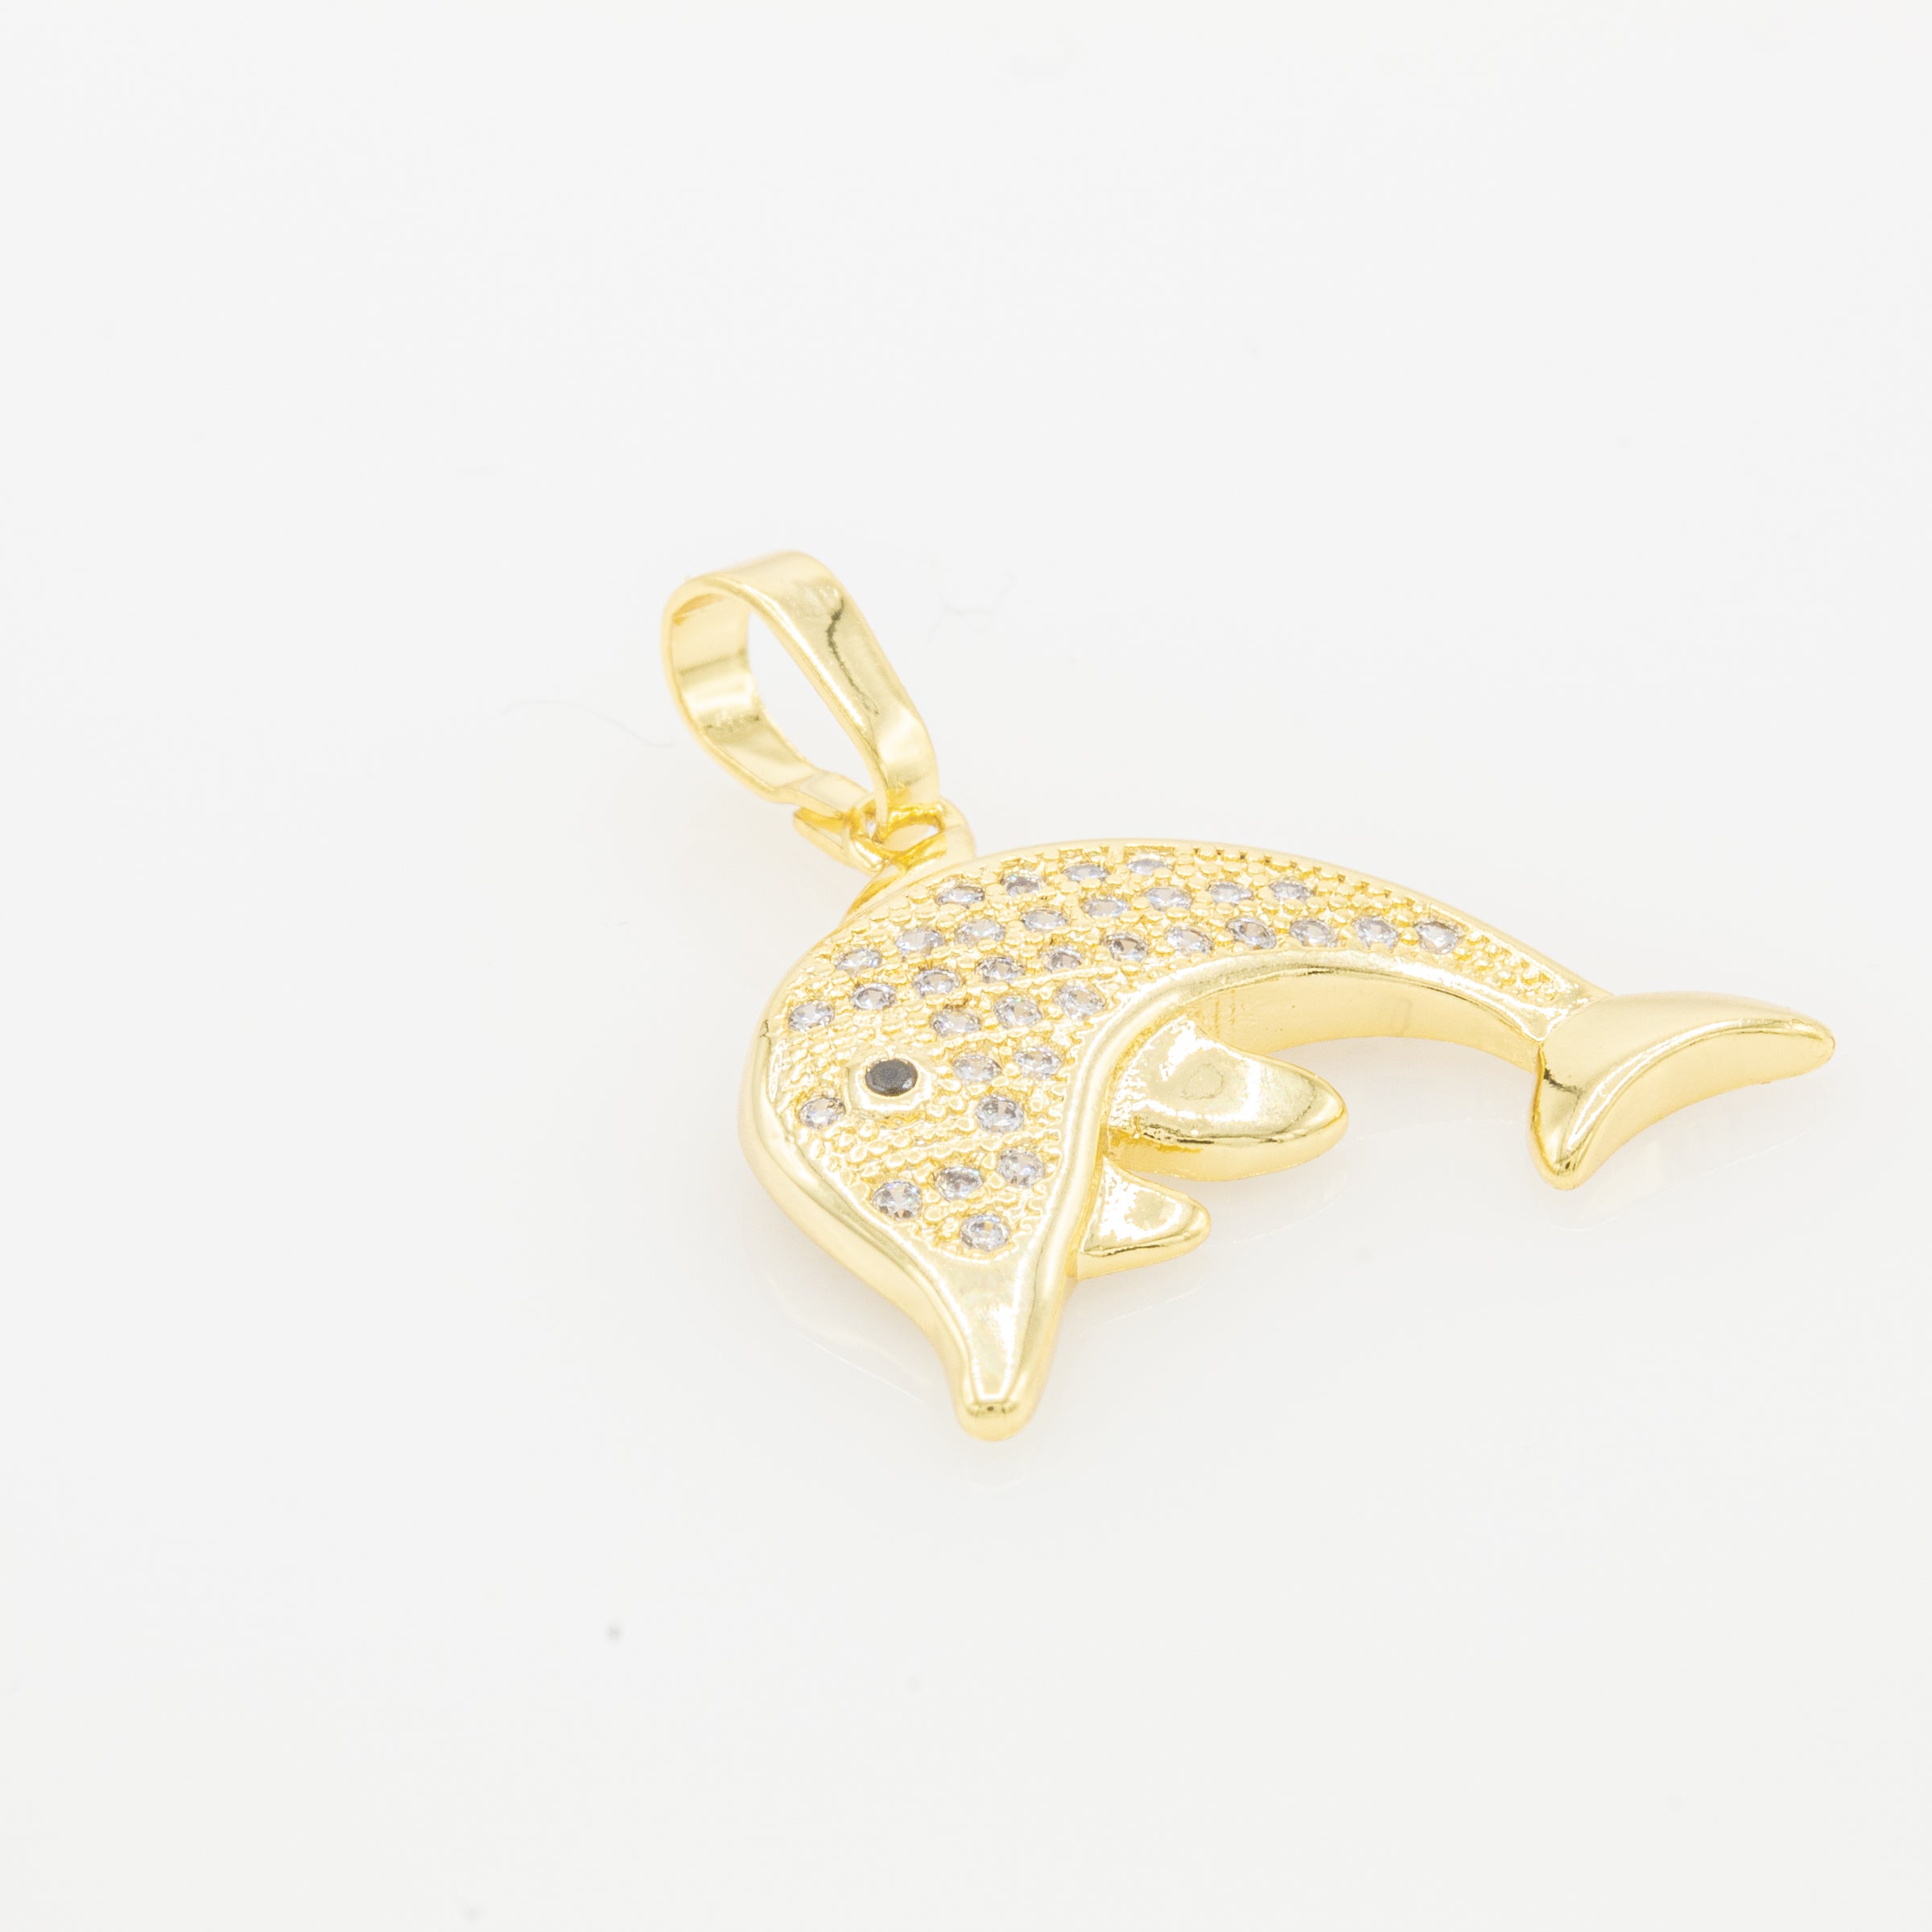 Dolphin Cubic Zirconia Pendant 14K Gold Filled Women Fashion Jewelry